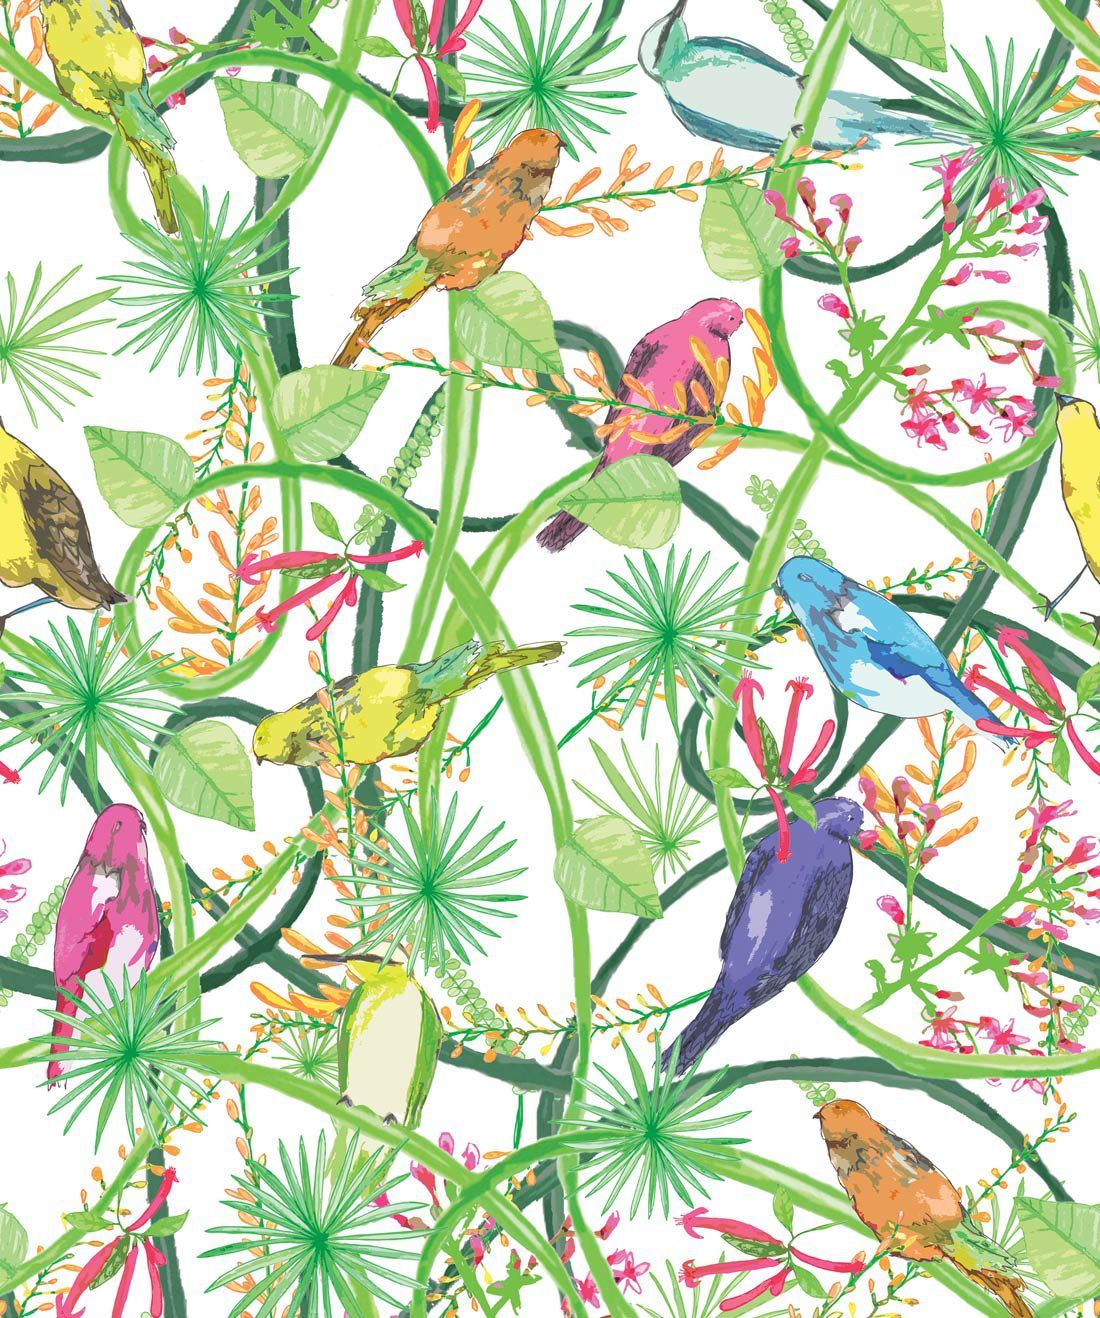 Vines in a tropical birds wallpaper